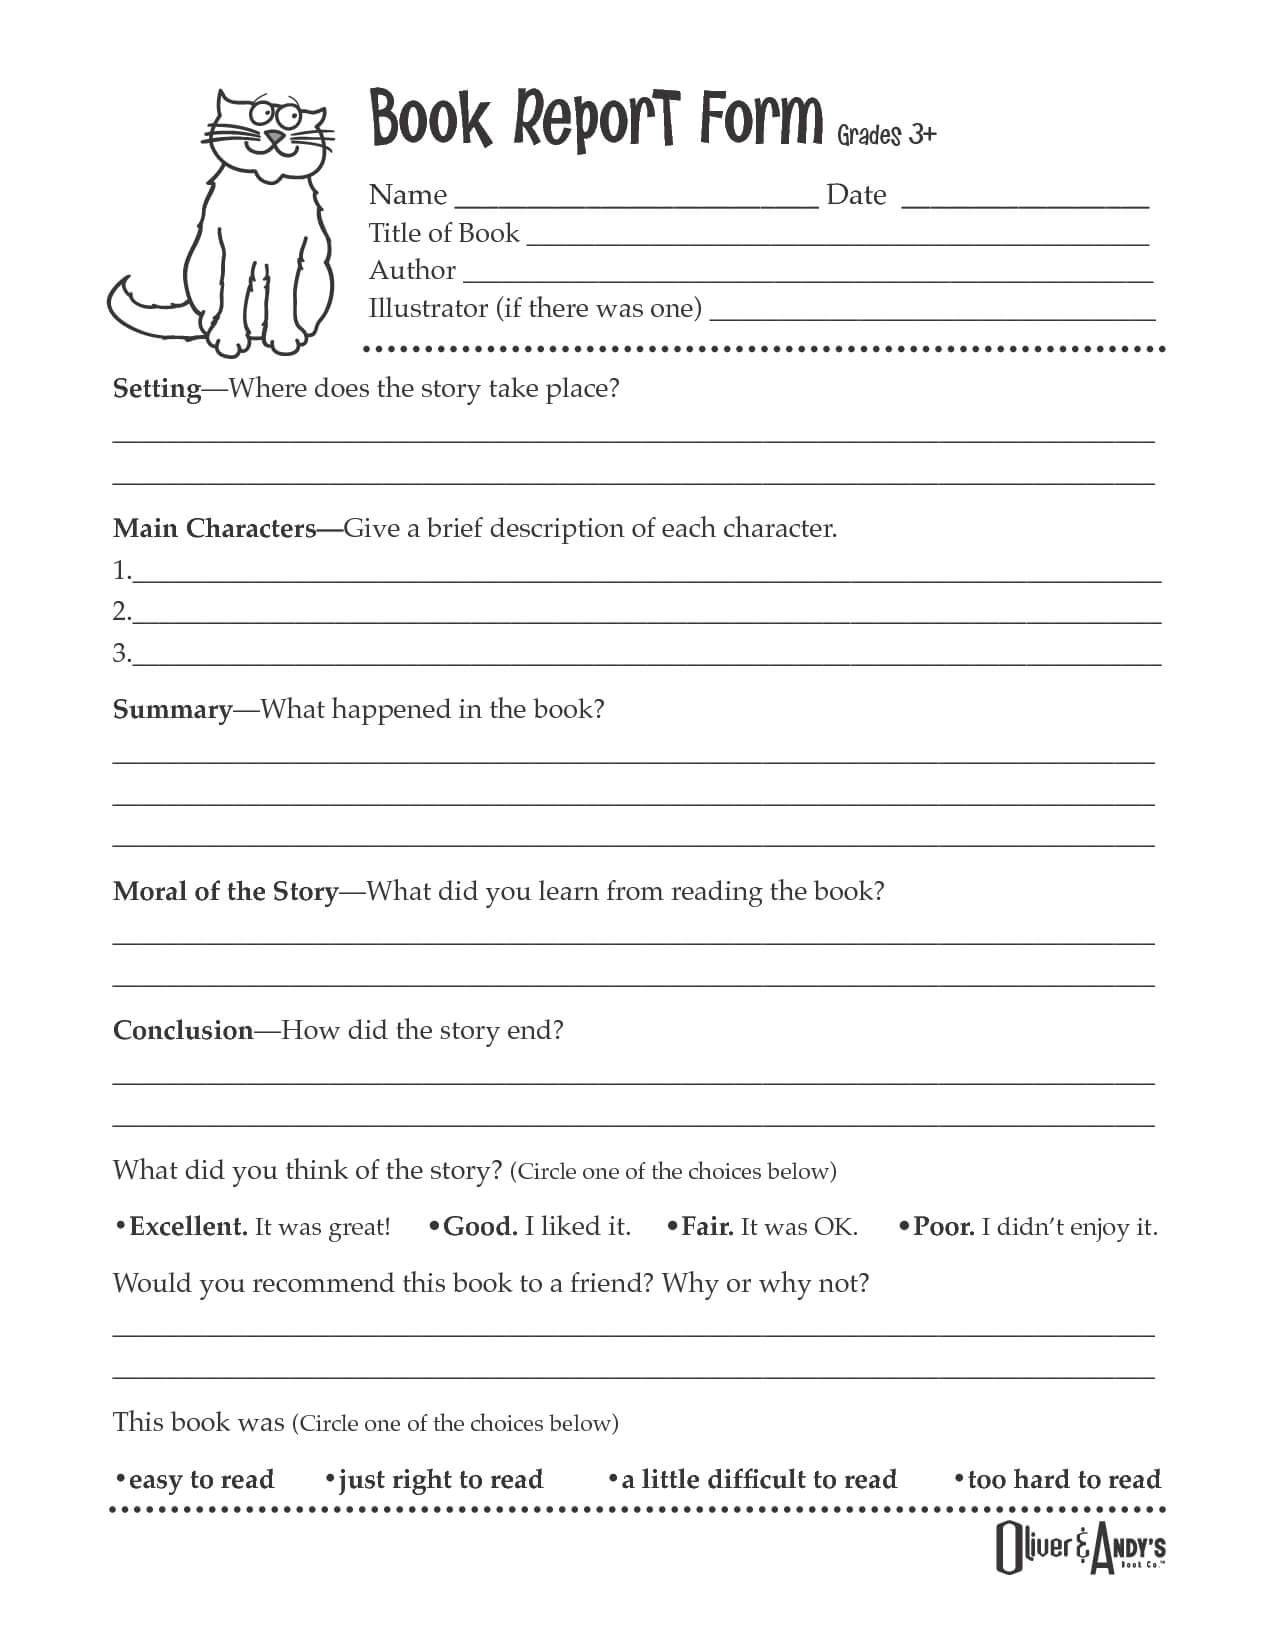 Second Grade Book Report Template | Book Report Form Grades Regarding Second Grade Book Report Template